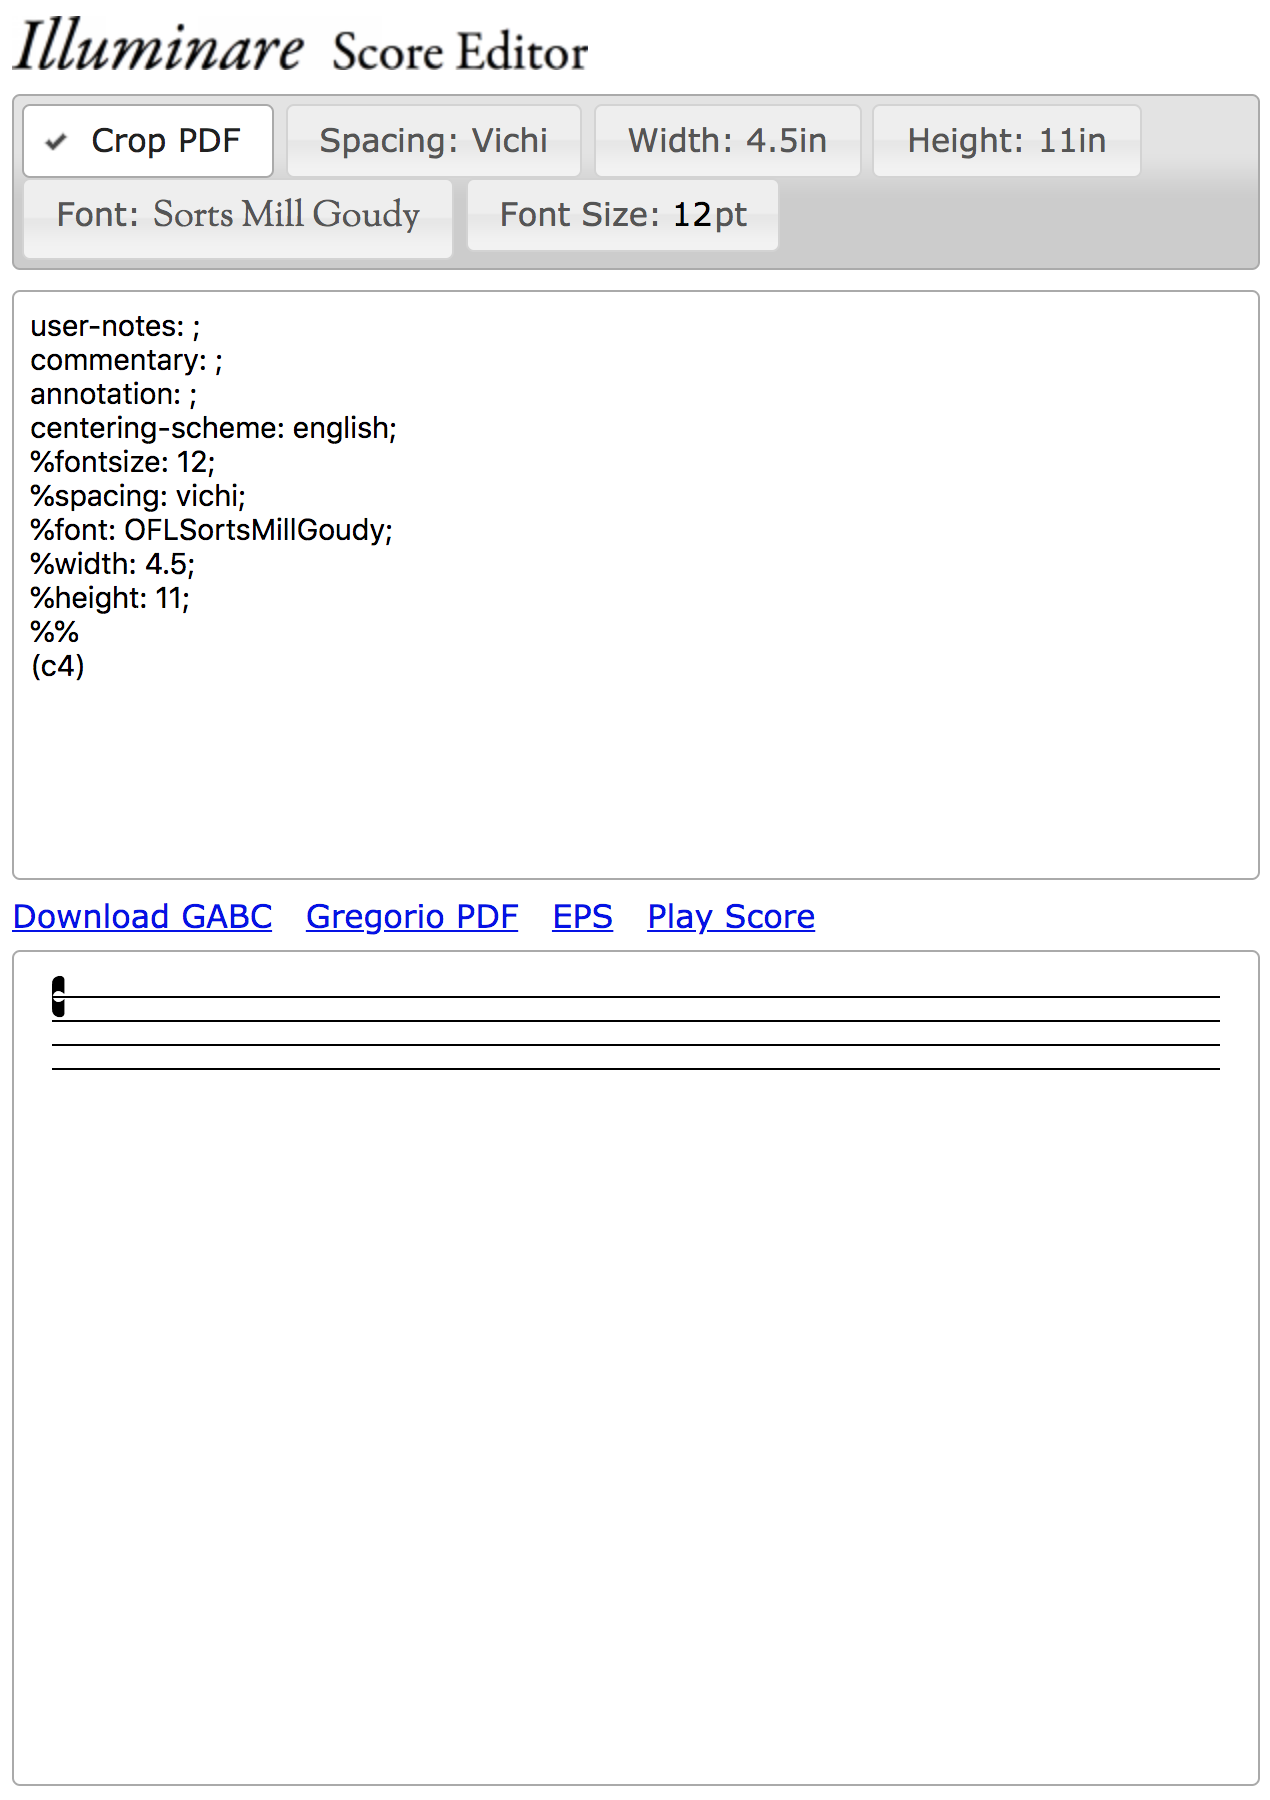 Illuminare Score Editor on open.  Click to enlarge...